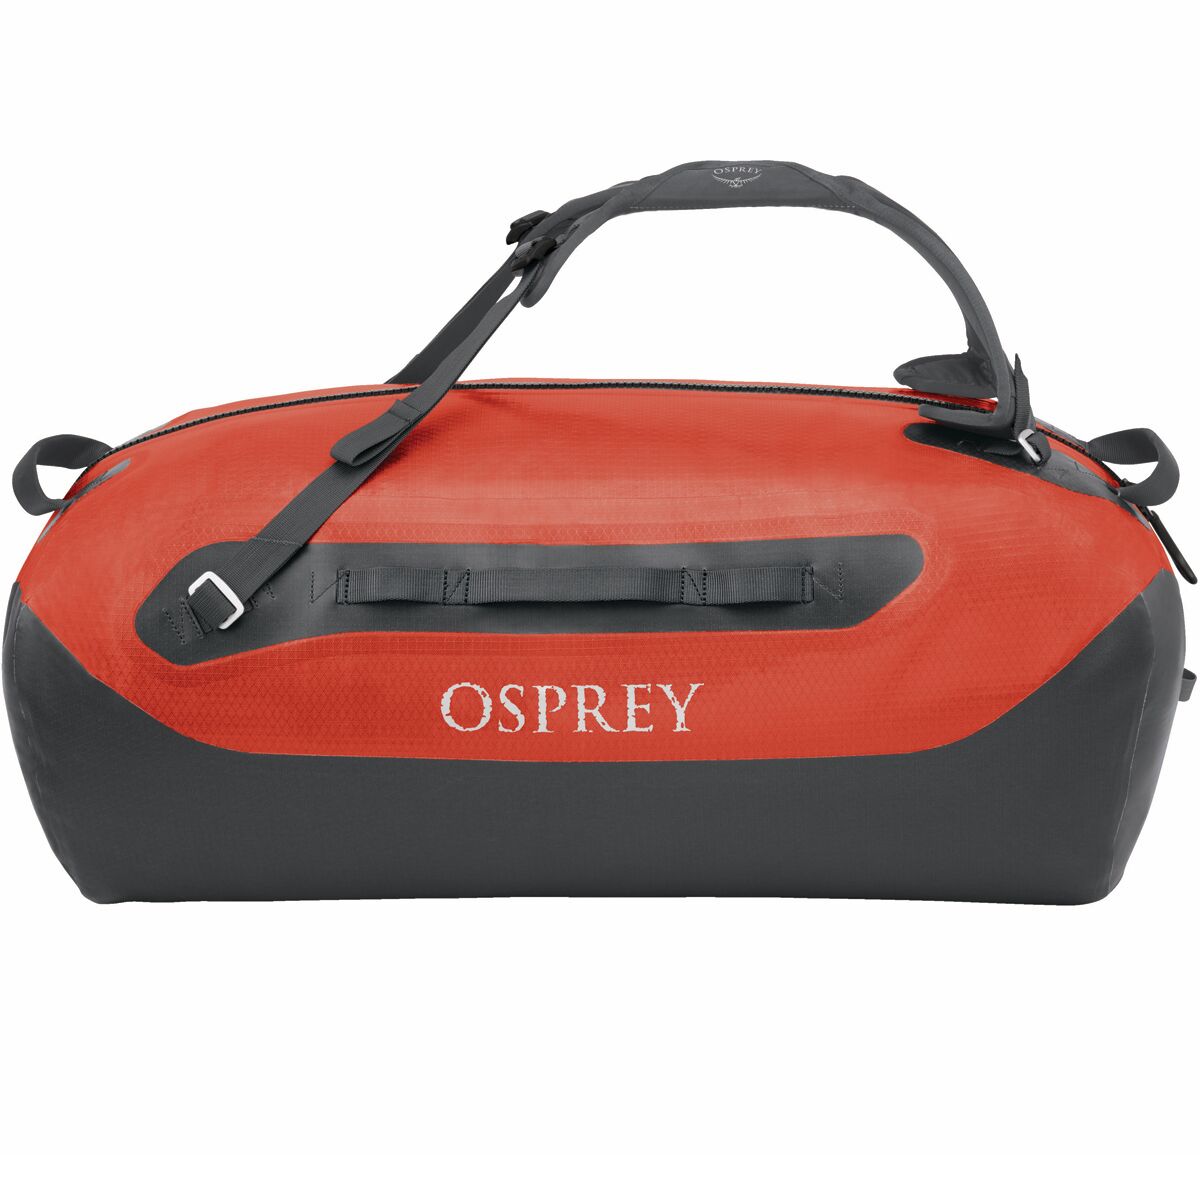 Osprey Packs Transporter Waterproof 70L Duffel Bag